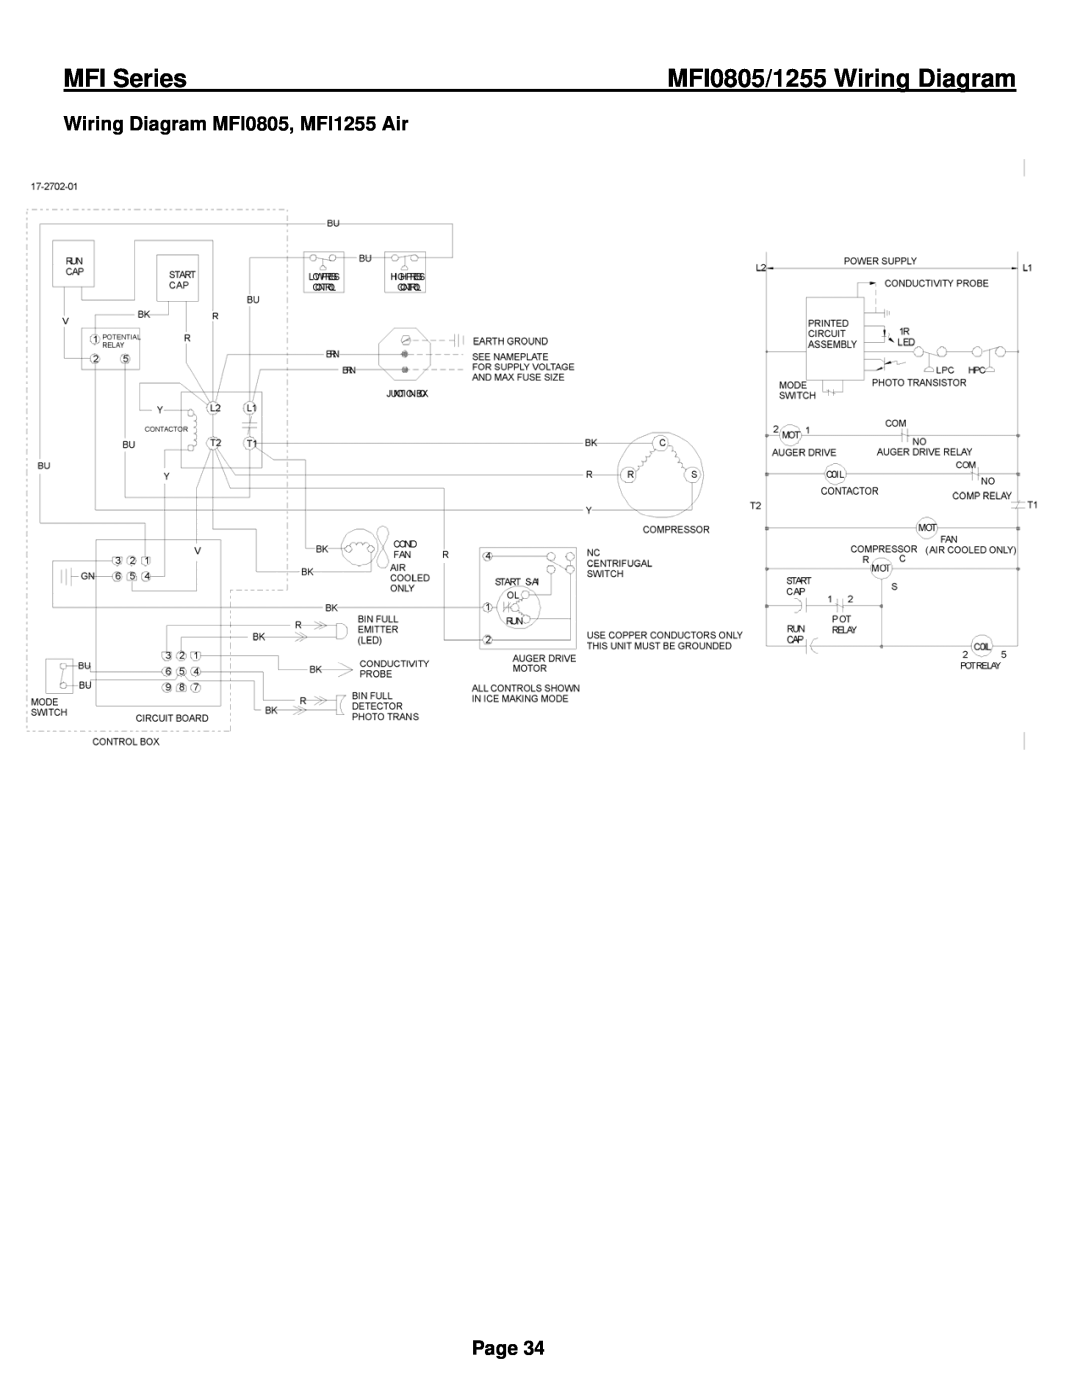 Ice-O-Matic installation manual MFI0805/1255 Wiring Diagram, Wiring Diagram MFI0805, MFI1255 Air, MFI Series, Page 